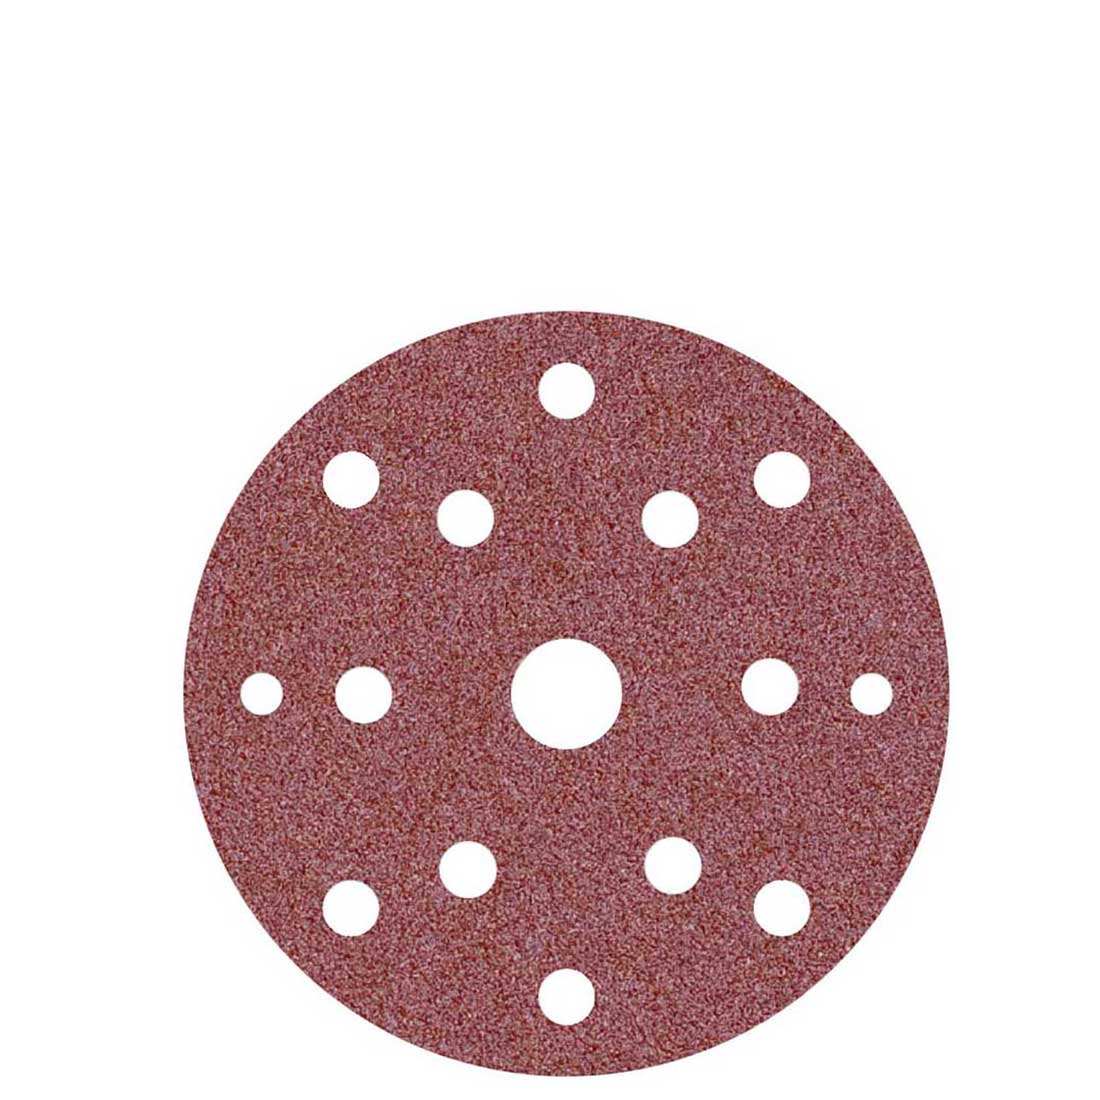 MioTools hook & loop sanding discs for random orbital sanders, G24–240, Ø 150 mm / 15 hole / aluminium oxide